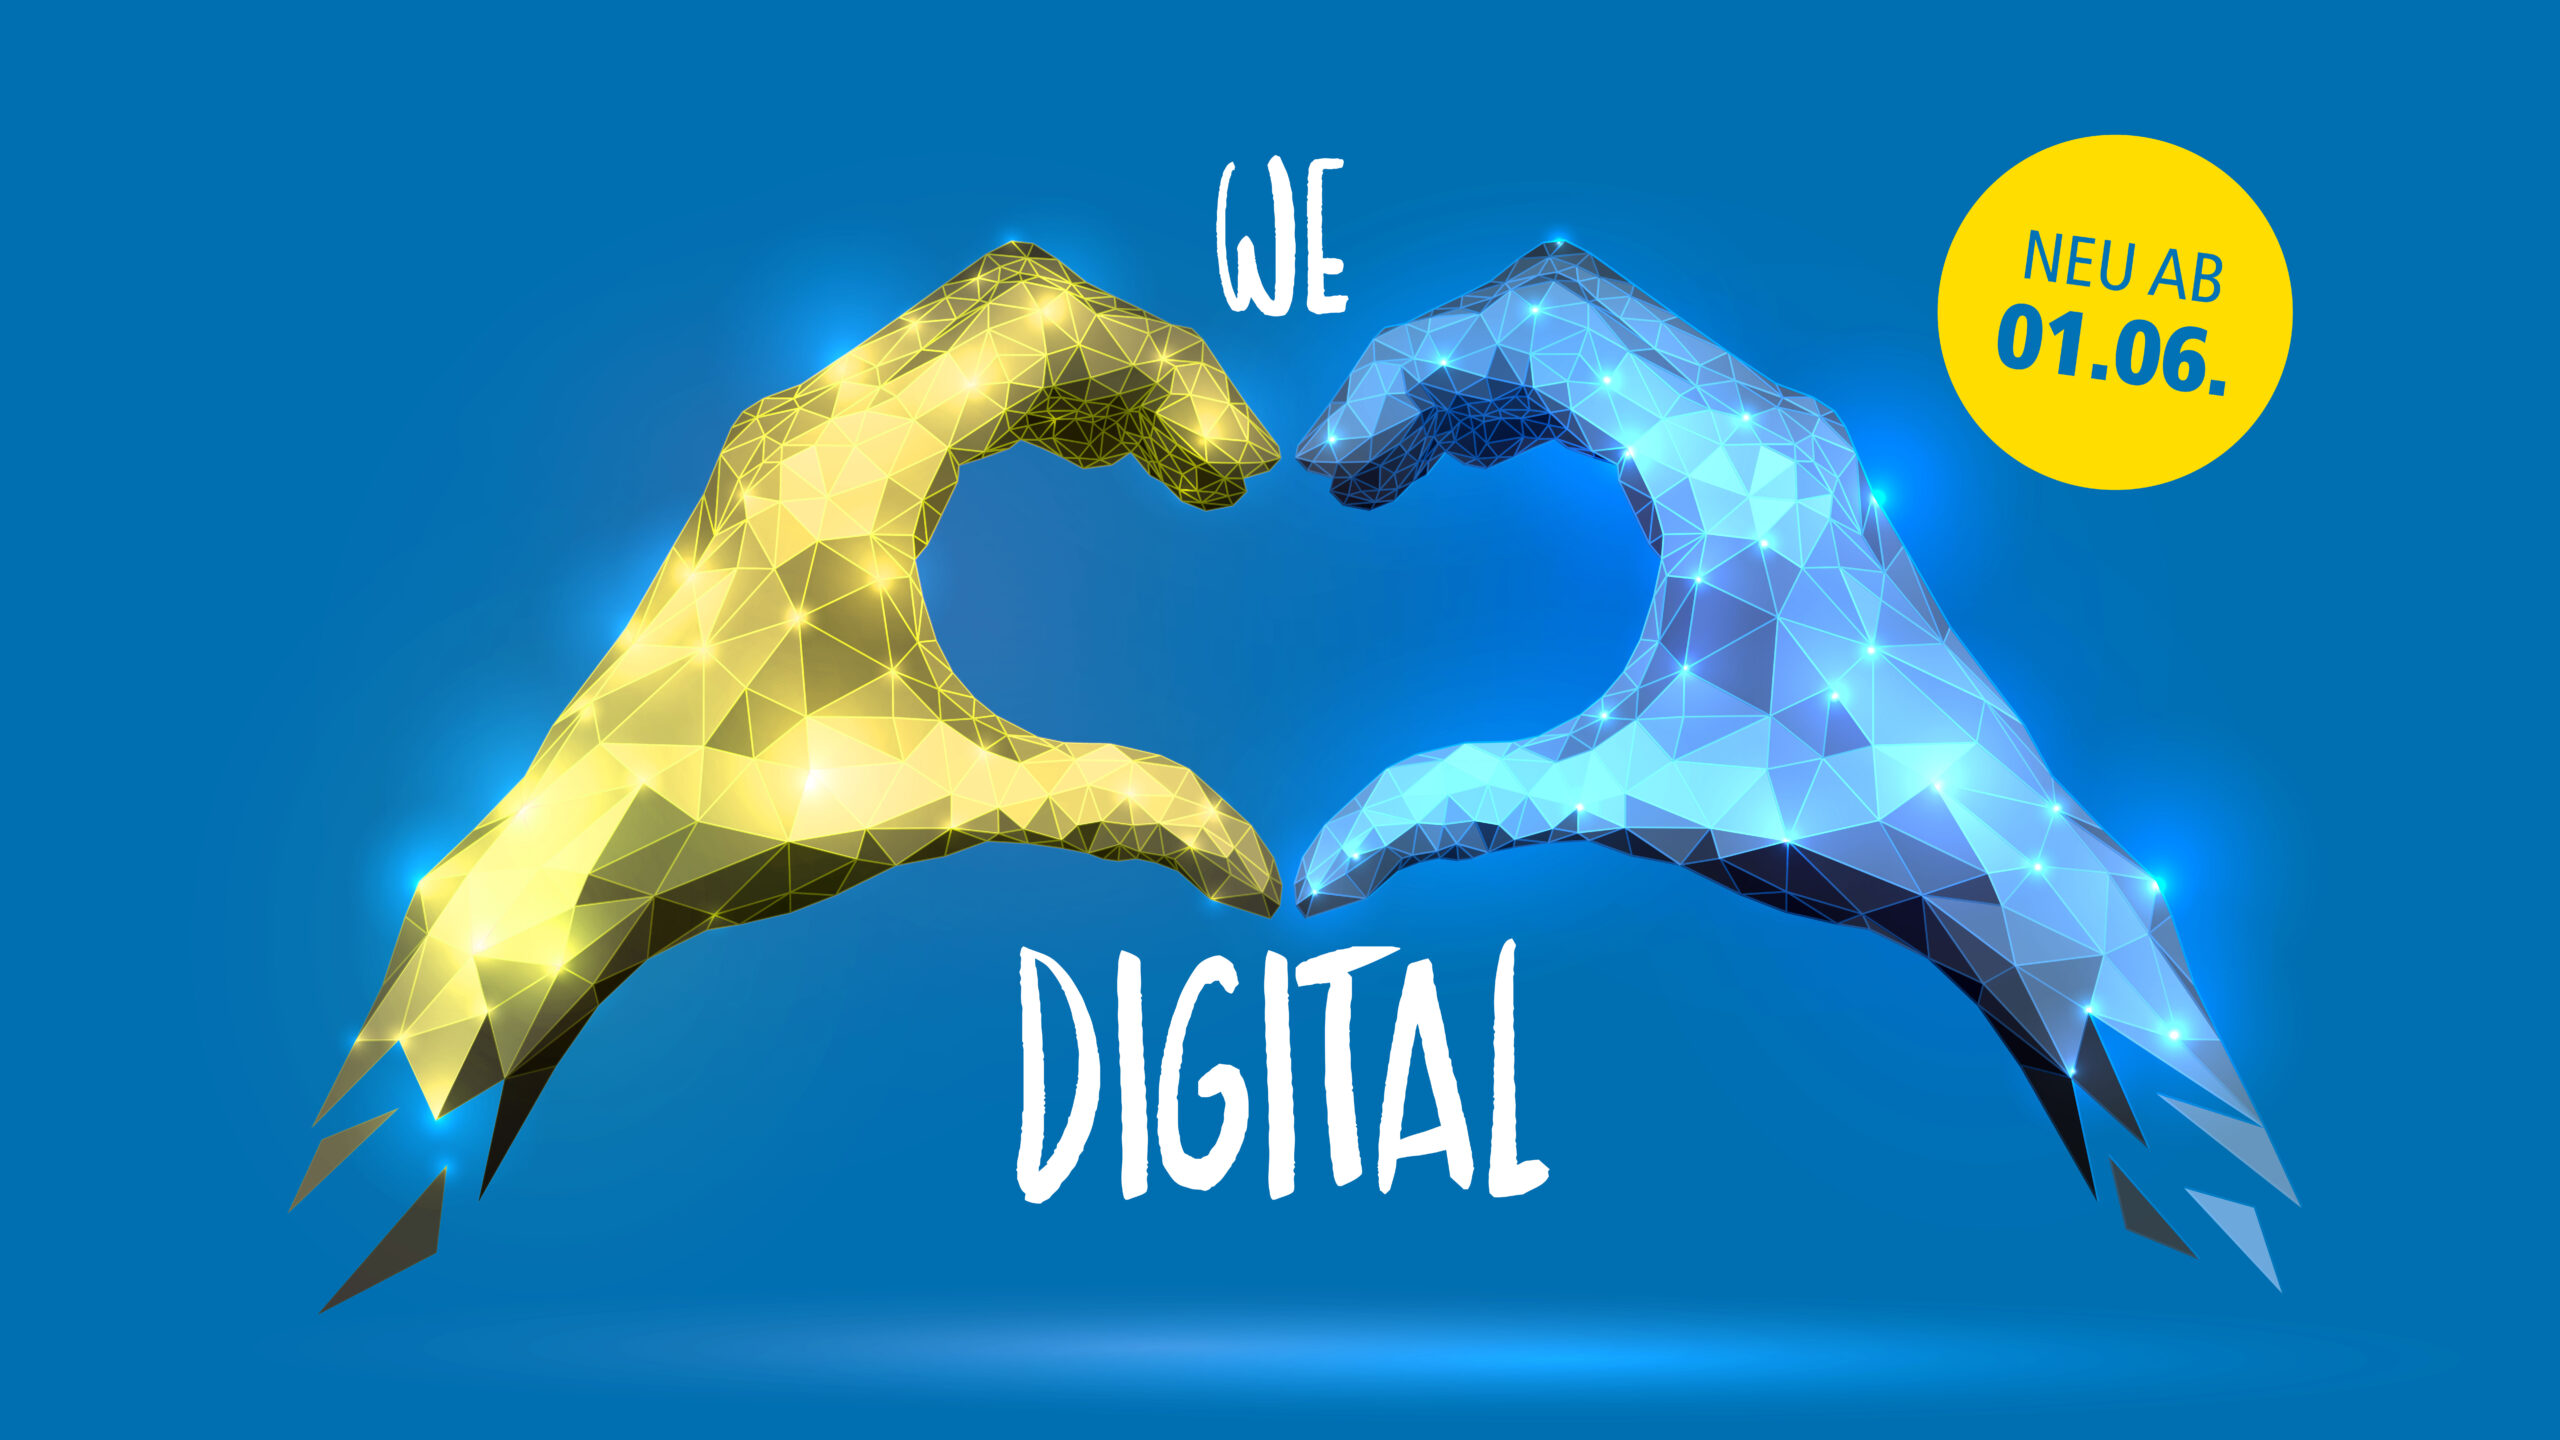 We love digital